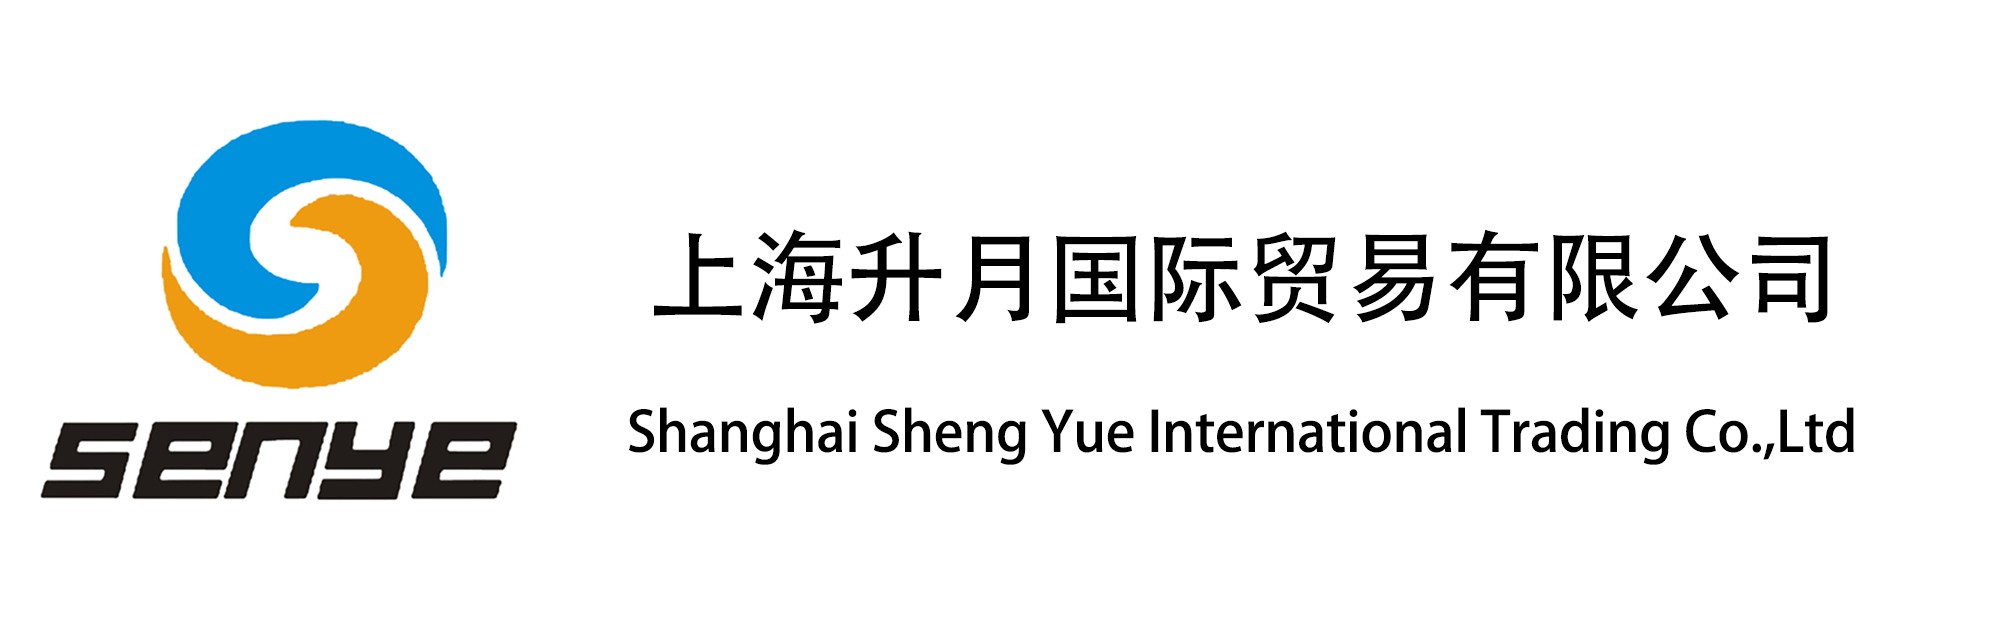 Shanghai Sheng Yue International Trading Co.,Ltd